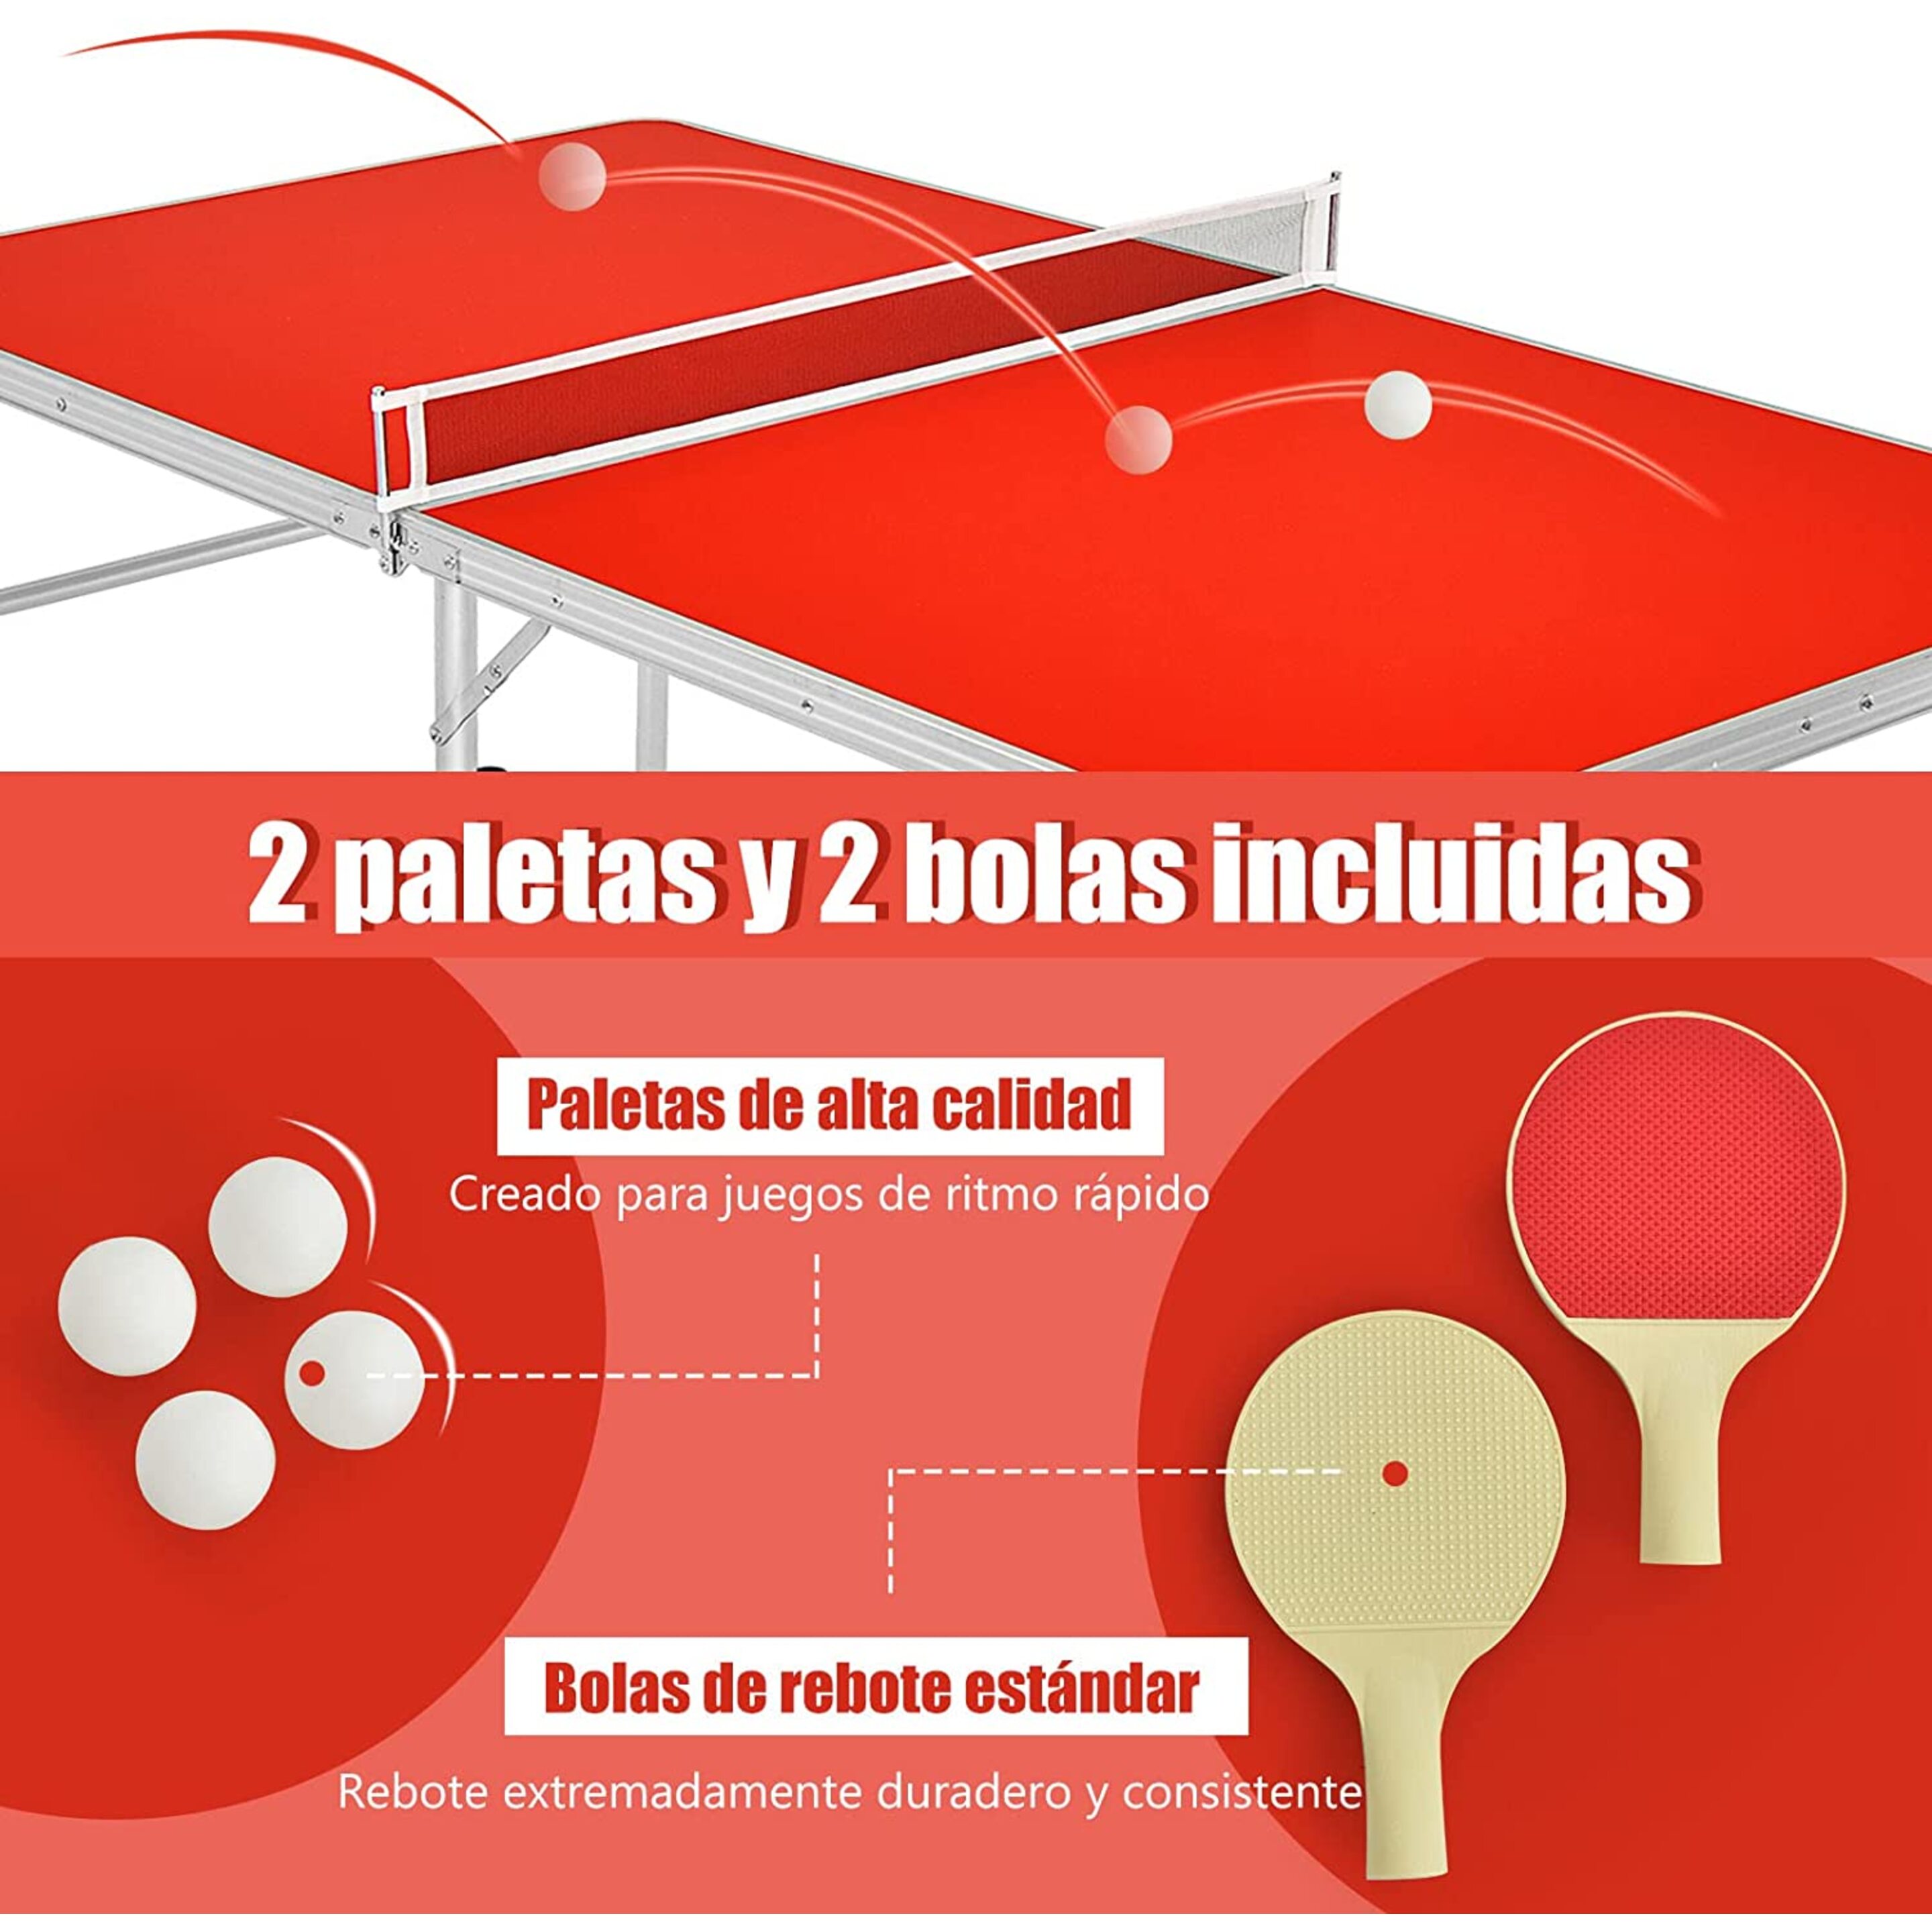 Mesa Ping Pong Plegable Tenis De Mesa Con Red Costway